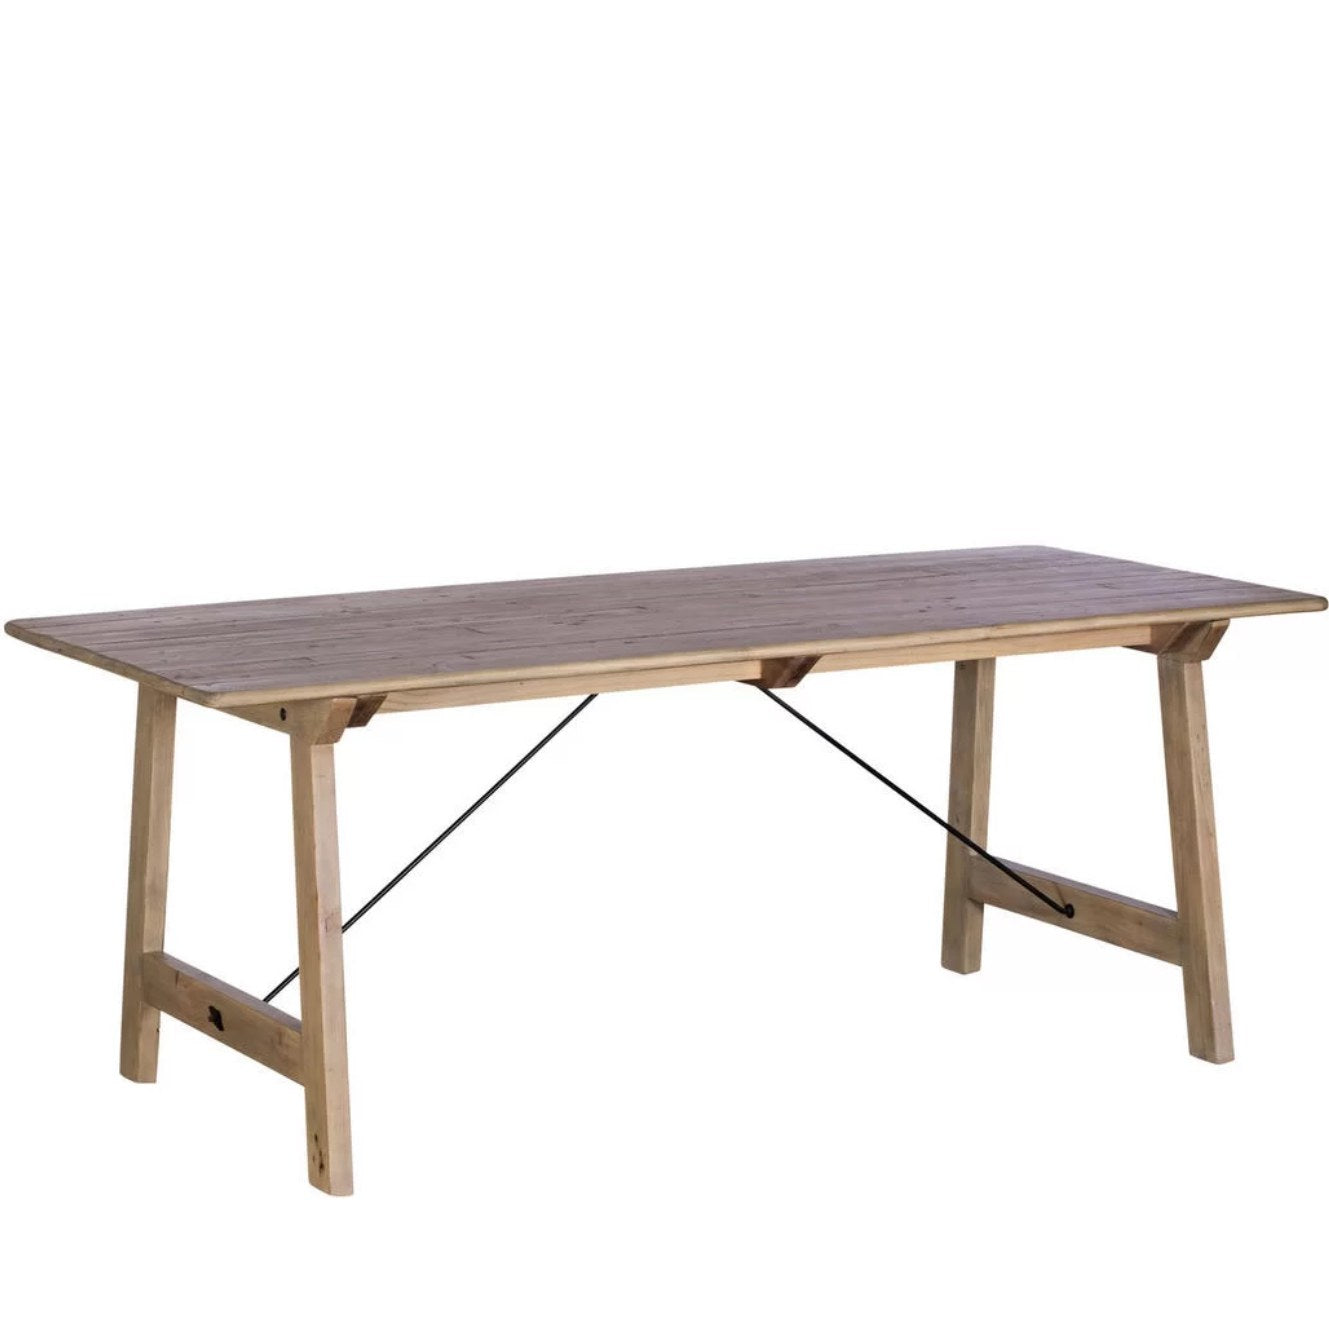 Valetta Fixed Table 200cm